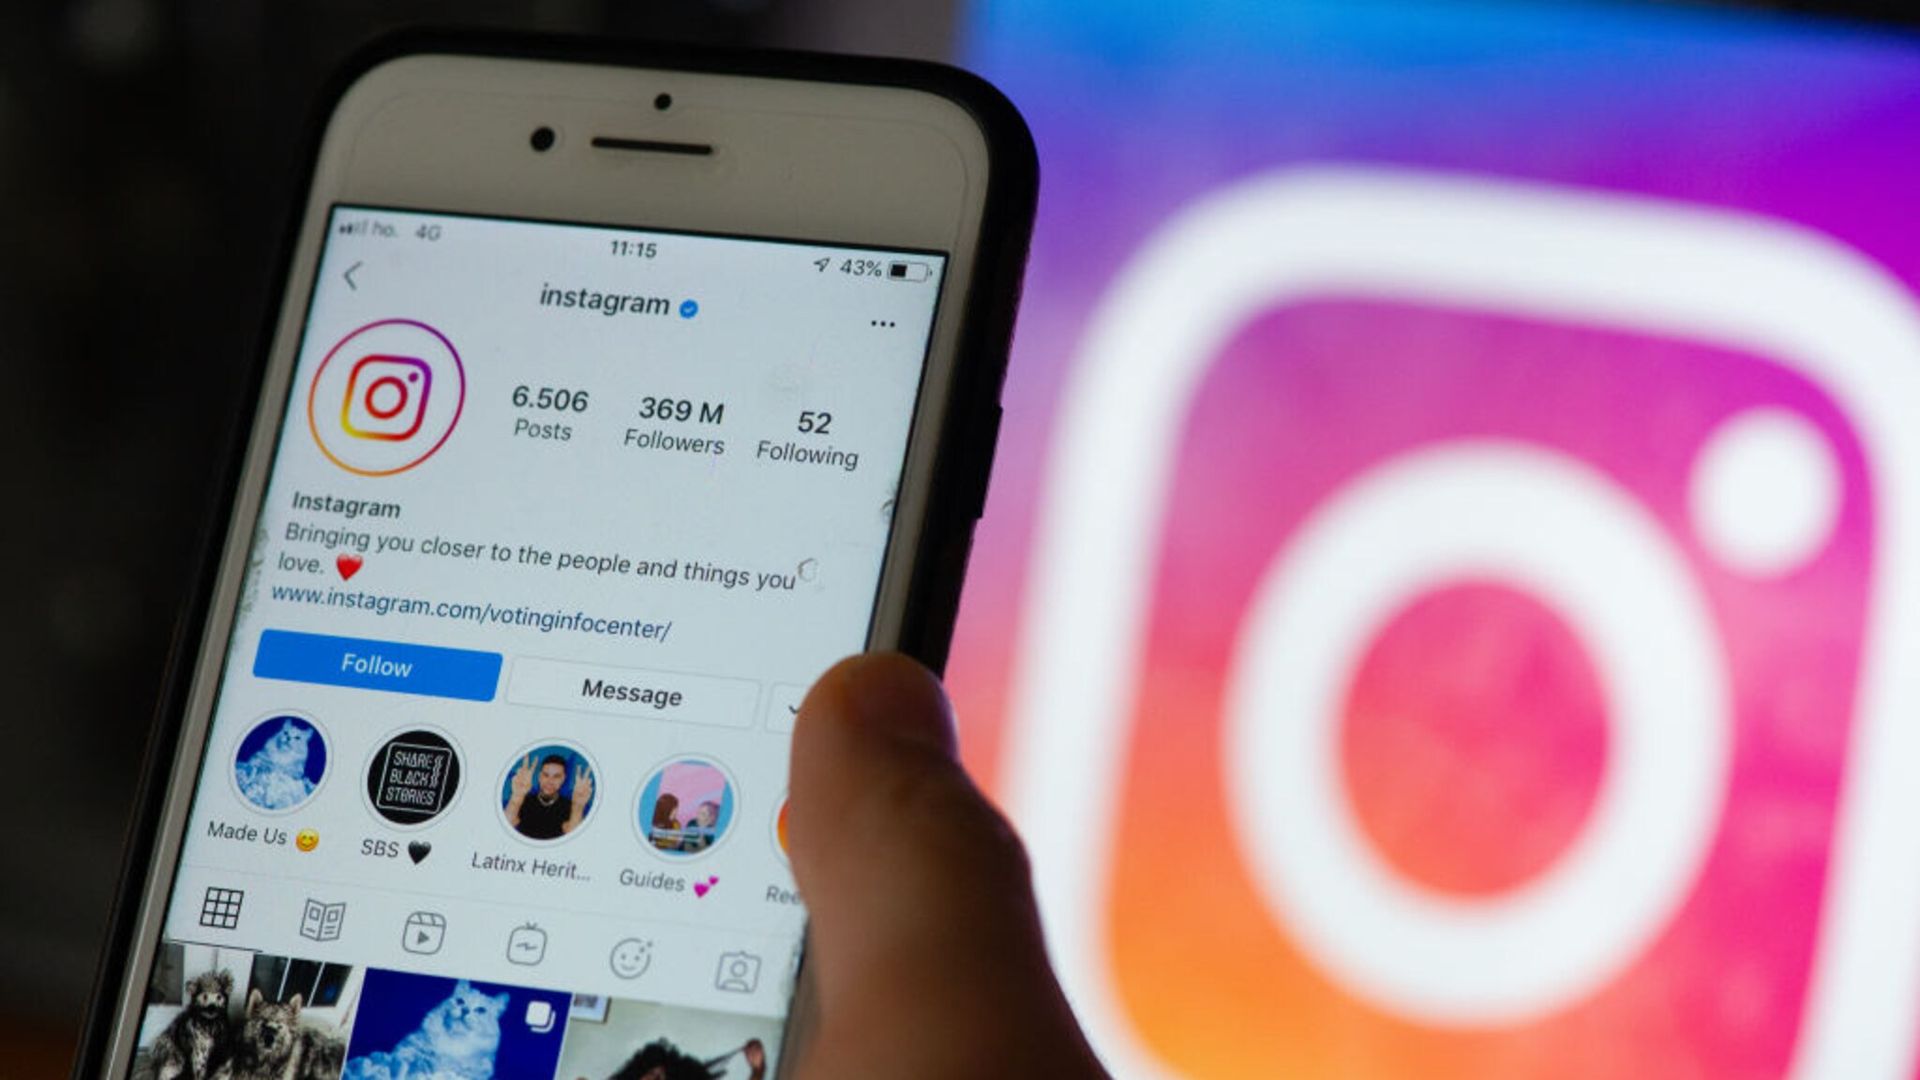 Instagram NFT integration program is expanding across 100 countries